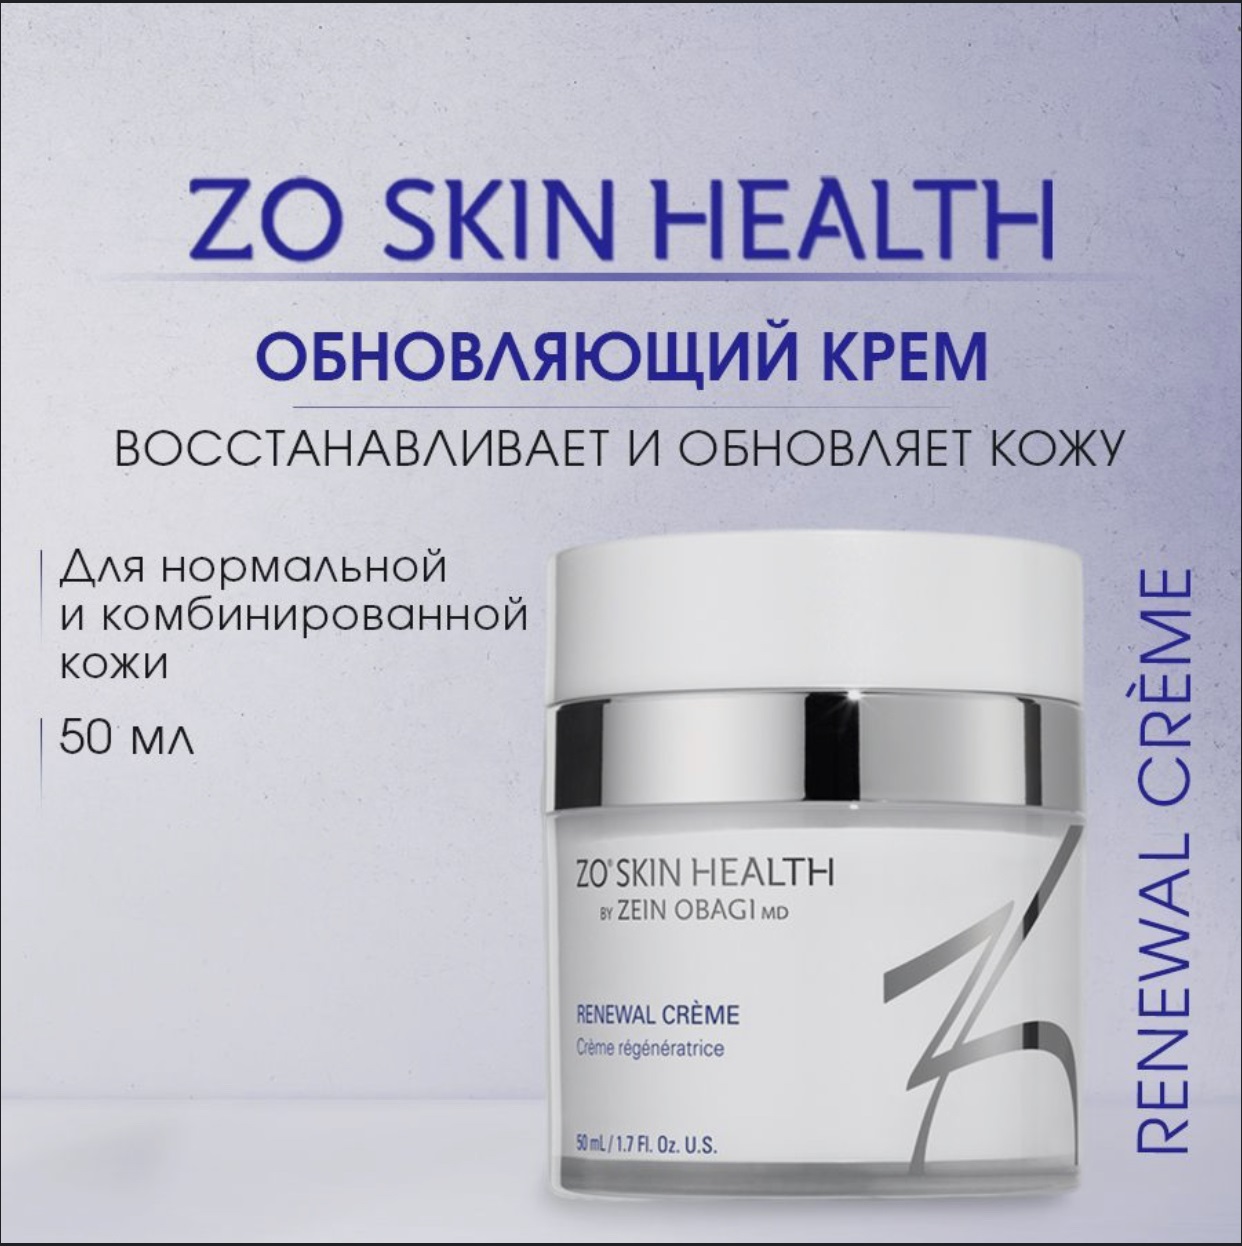 Крем ZO Skin Health by Zein Obagi Renewa l creme обновляющий, 50 мл обновляющий крем renewal cream